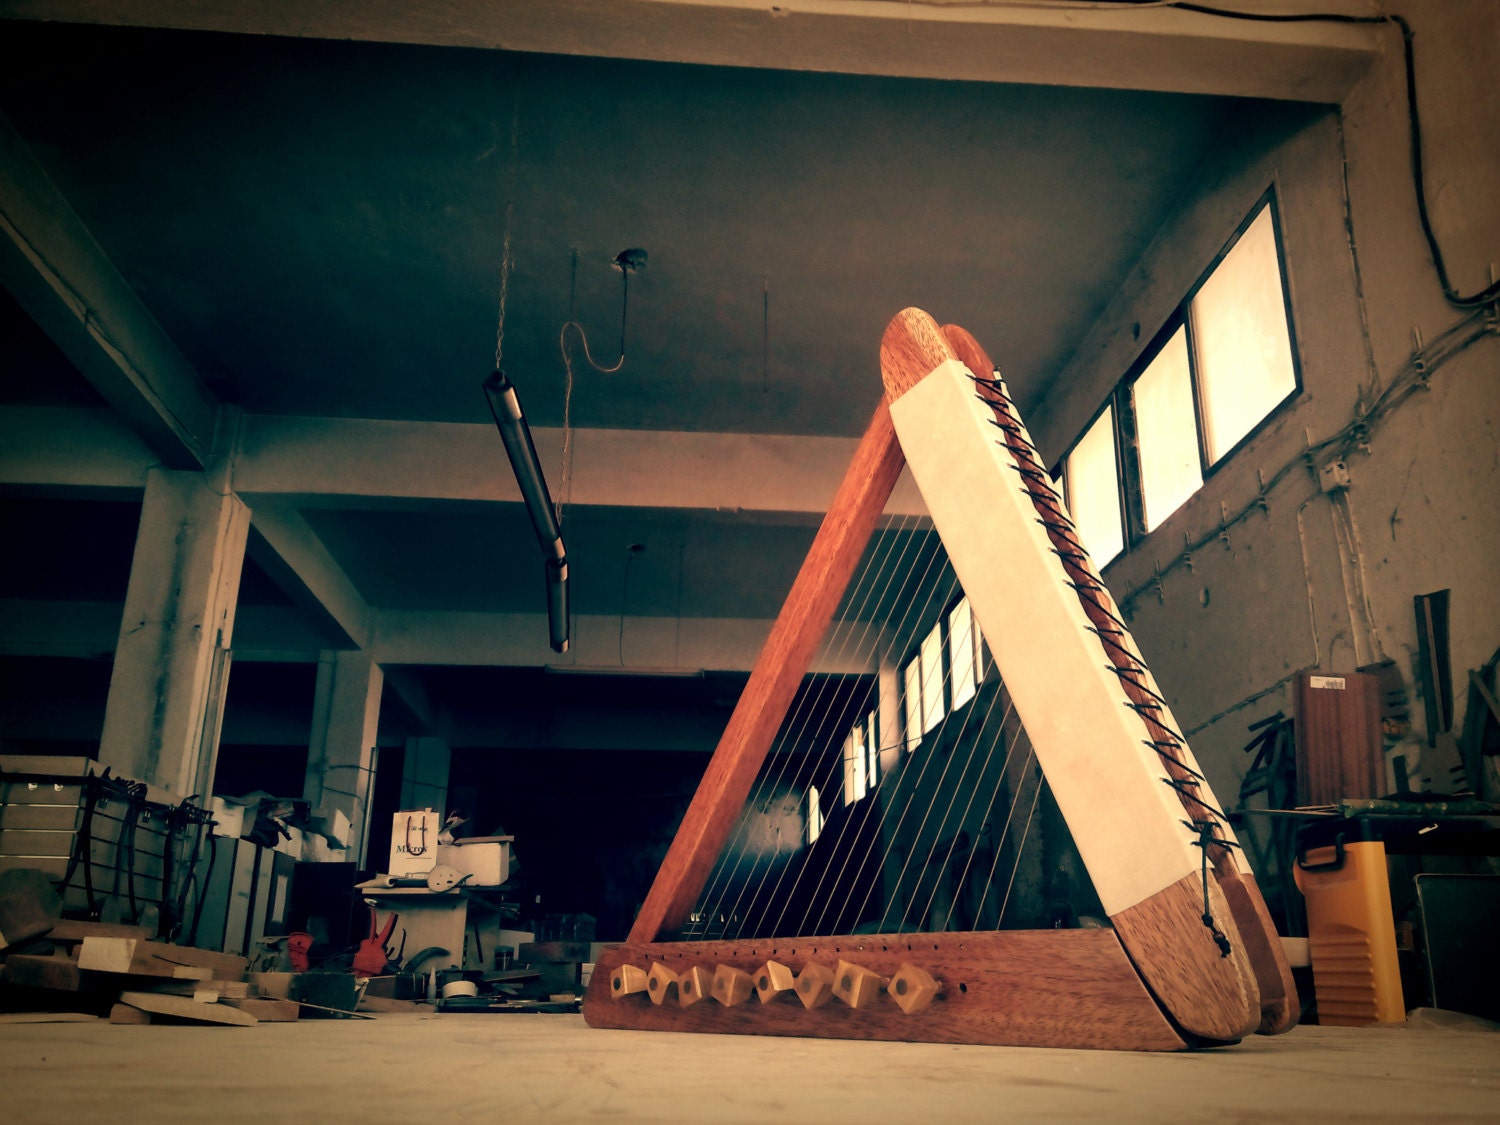 The Lethe Harp The Ancient Greek Harp of Oblivion